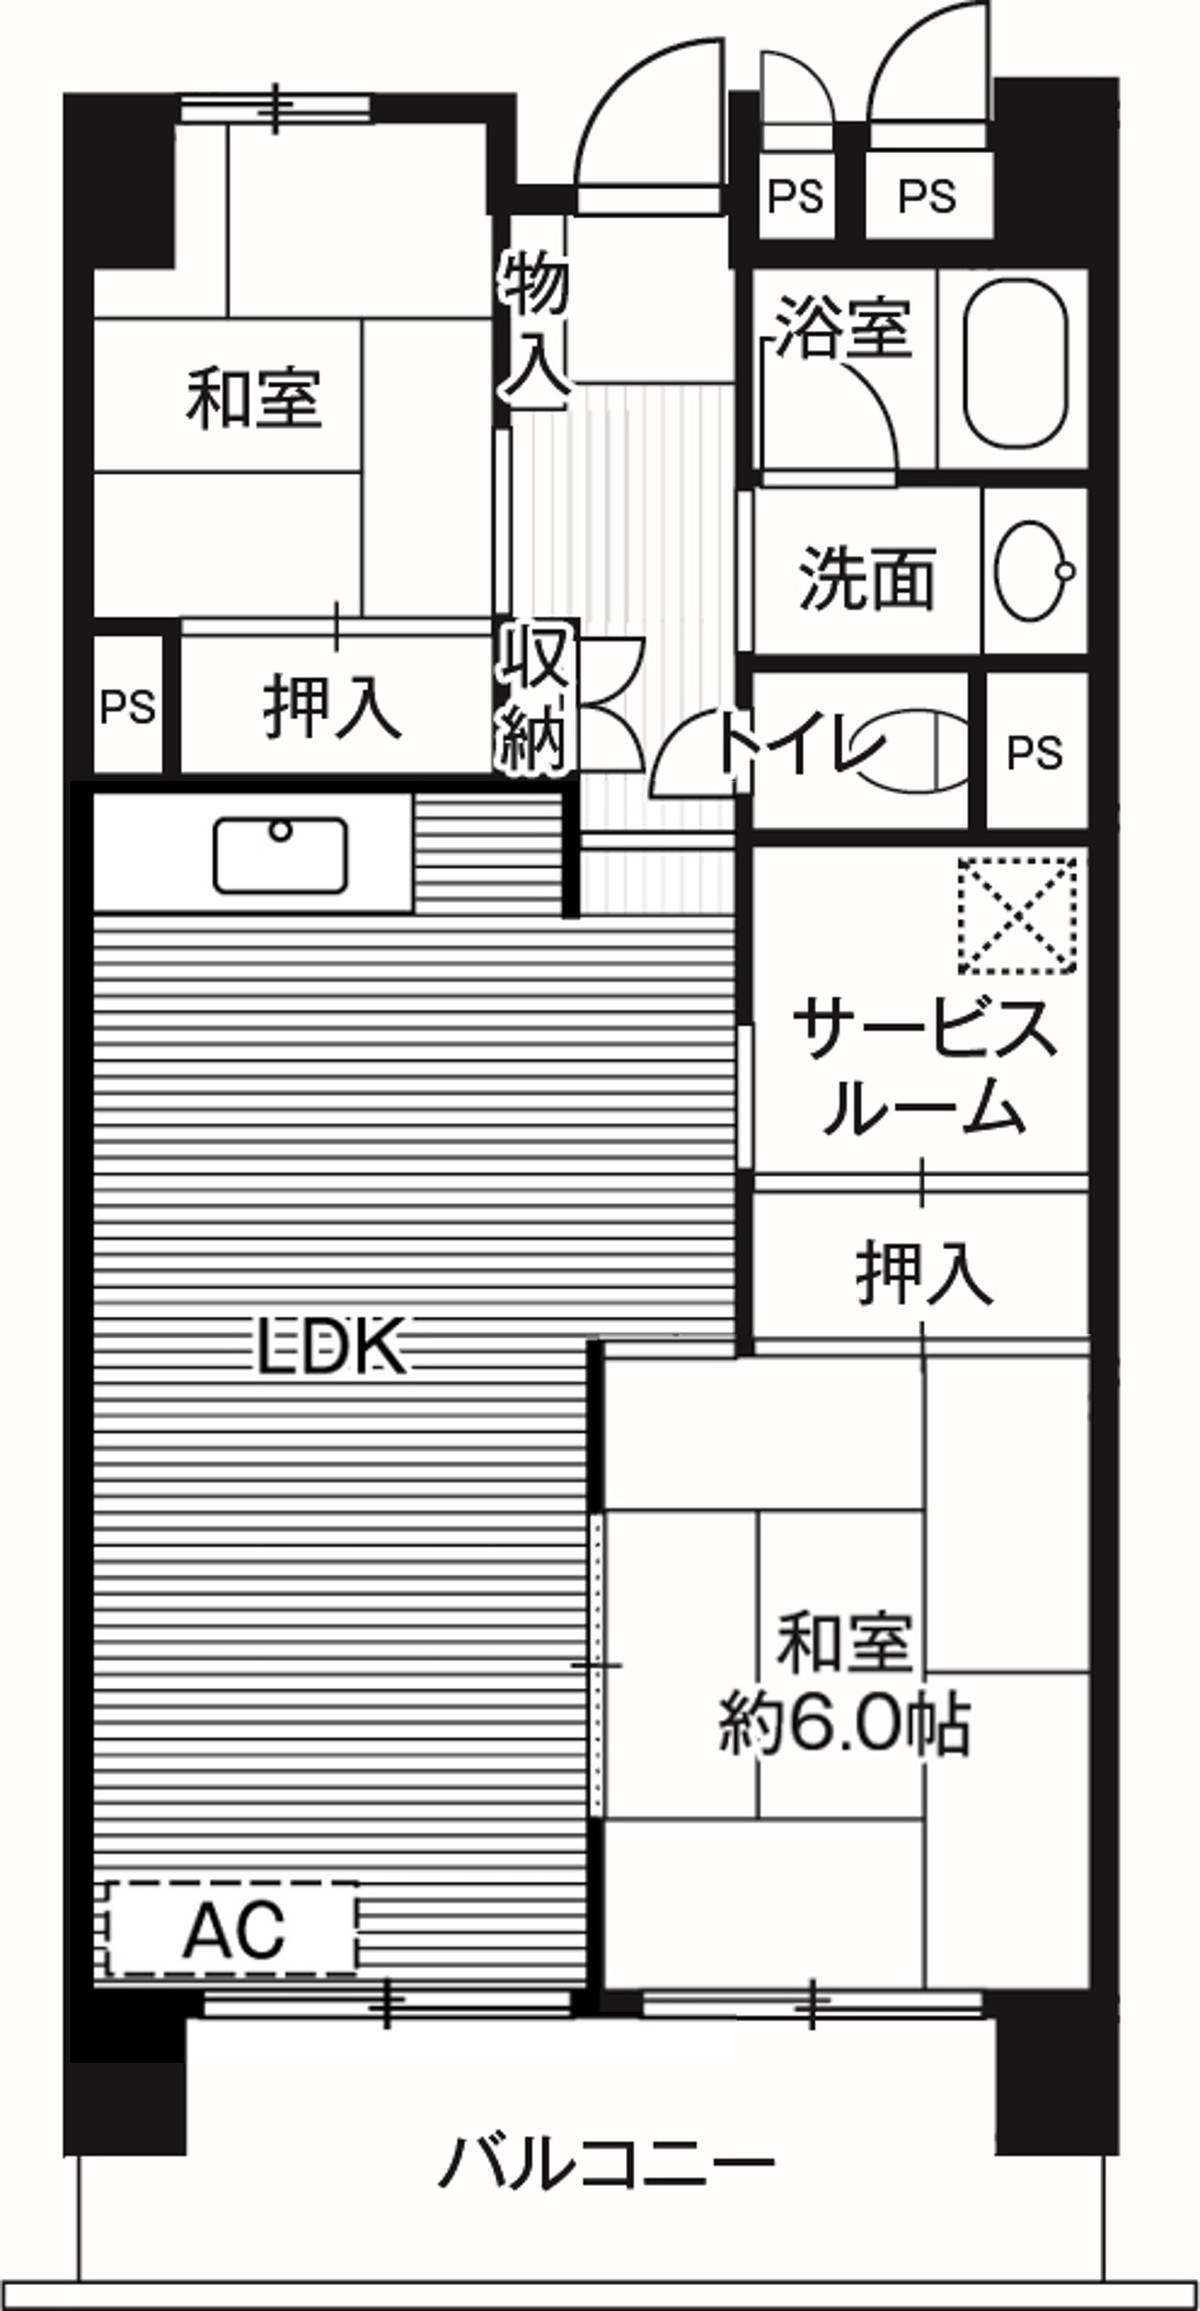 2SLDK floorplan of Village House Narita Azuma Tower in Narita-shi